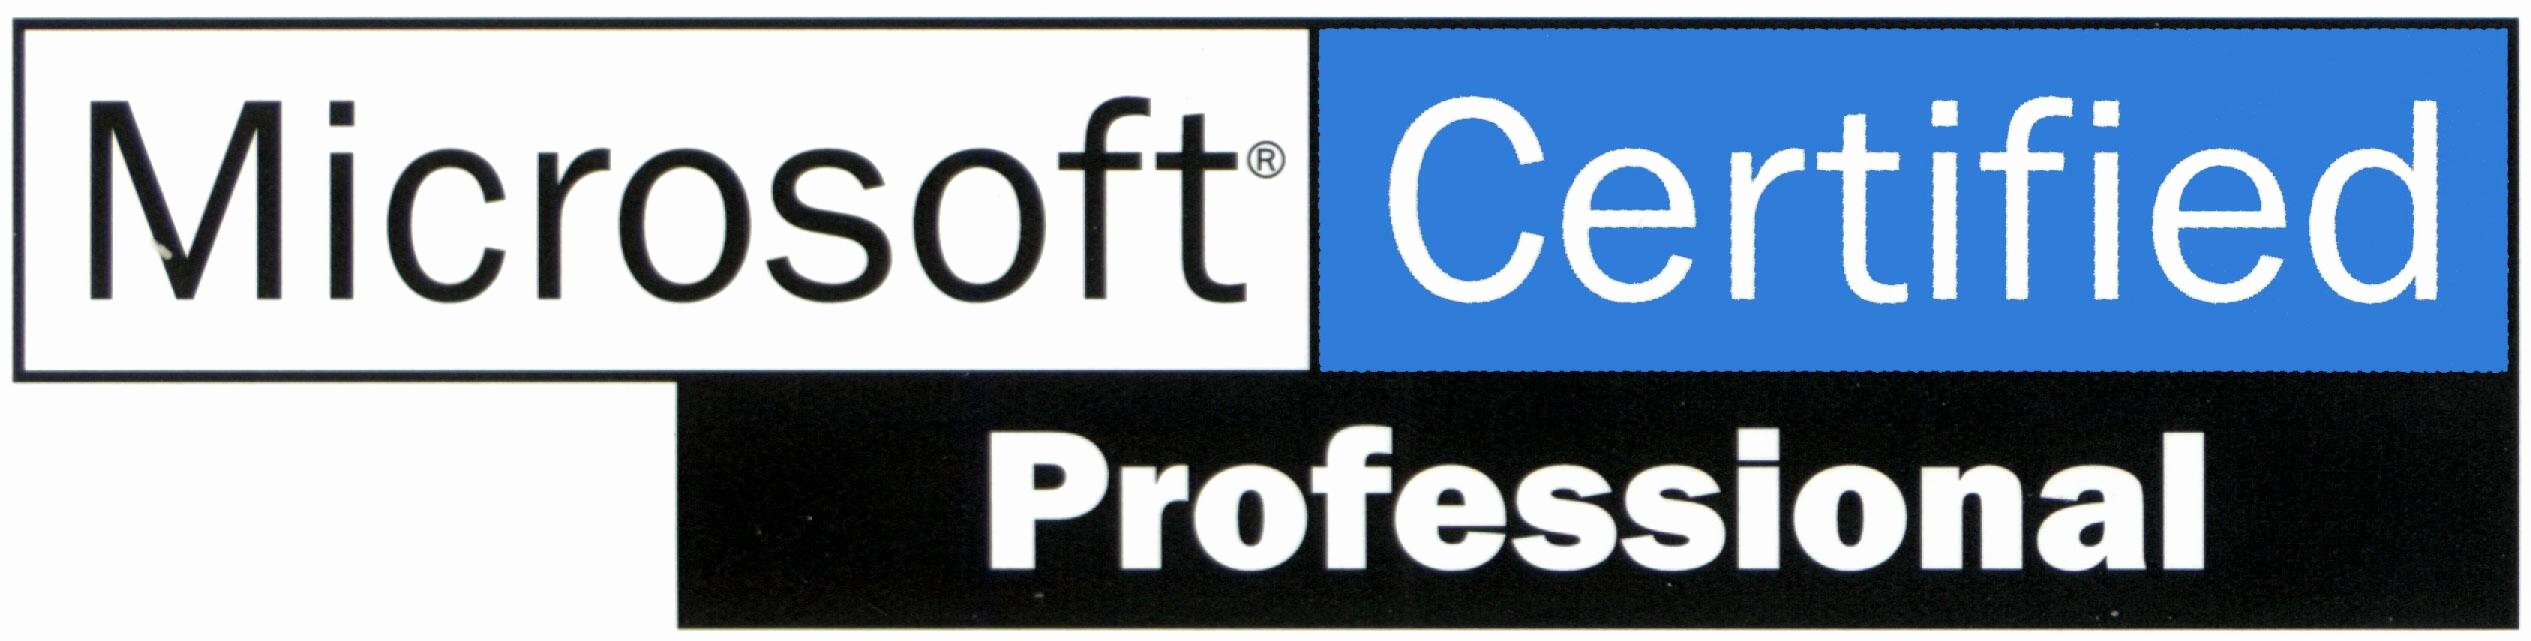 Microsoft Certified Professional Logo Download Lovely Triple Oak Leaf Puter Services